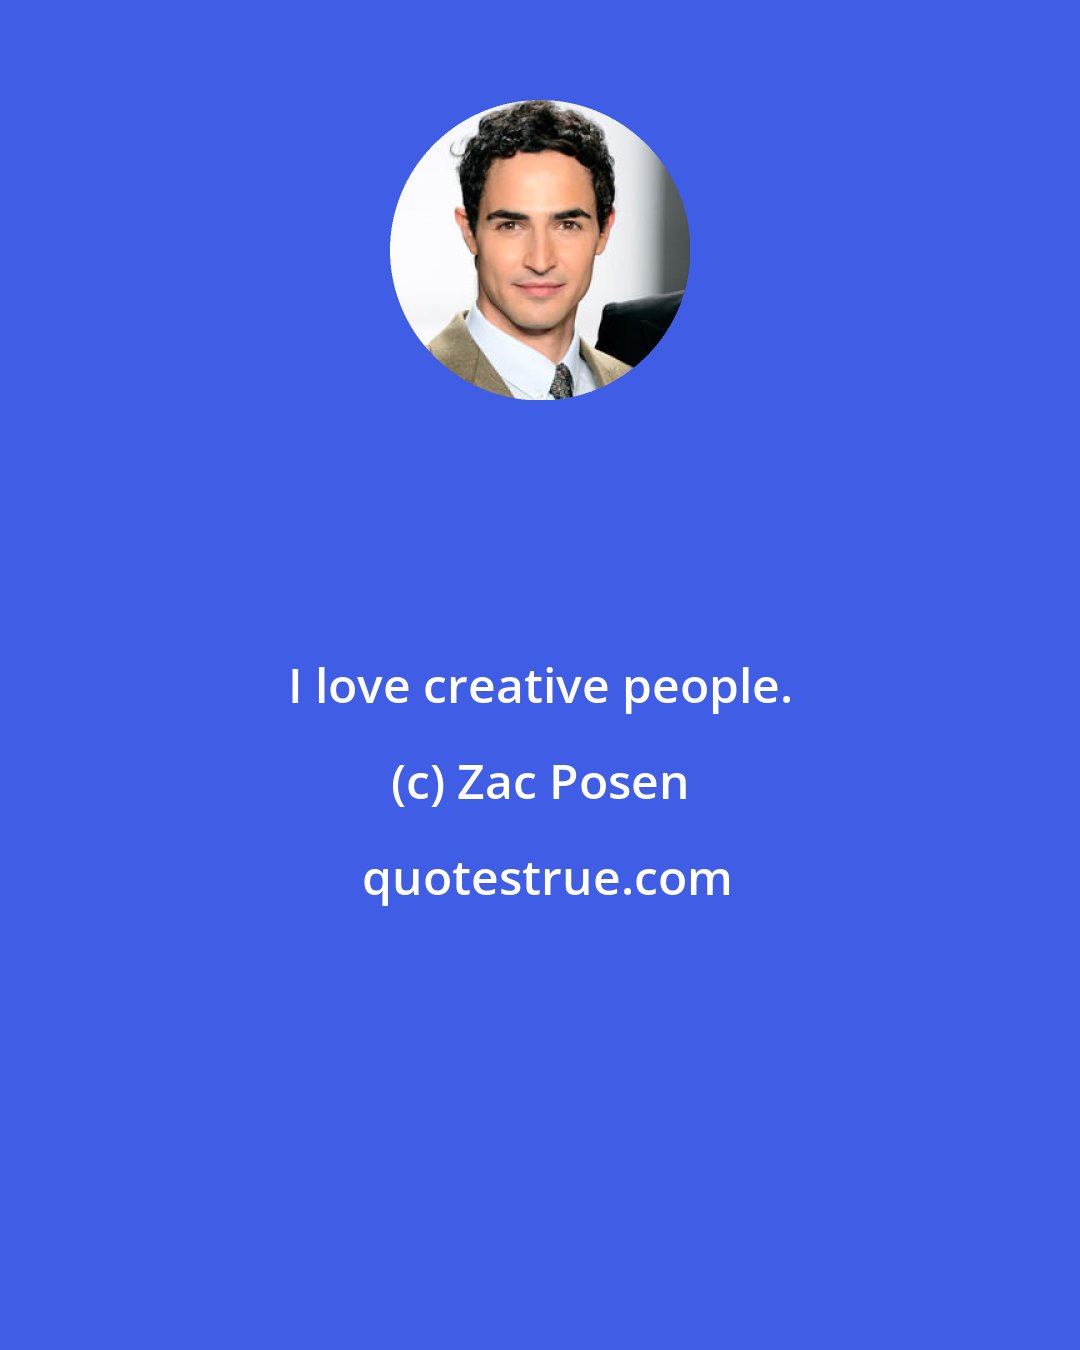 Zac Posen: I love creative people.